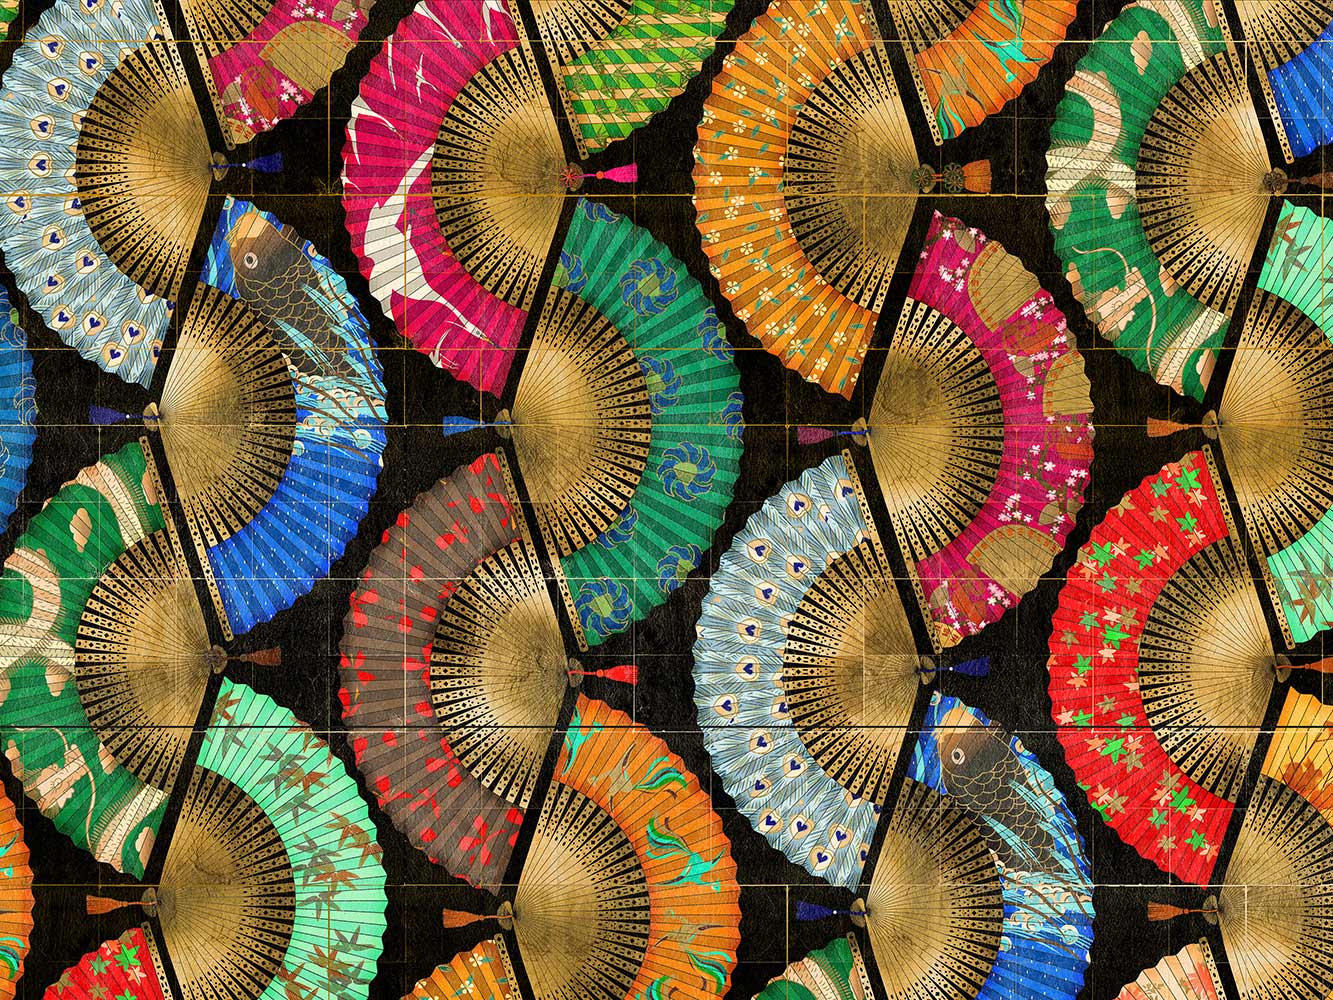 Sensu Fan repeat pattern with decorative details